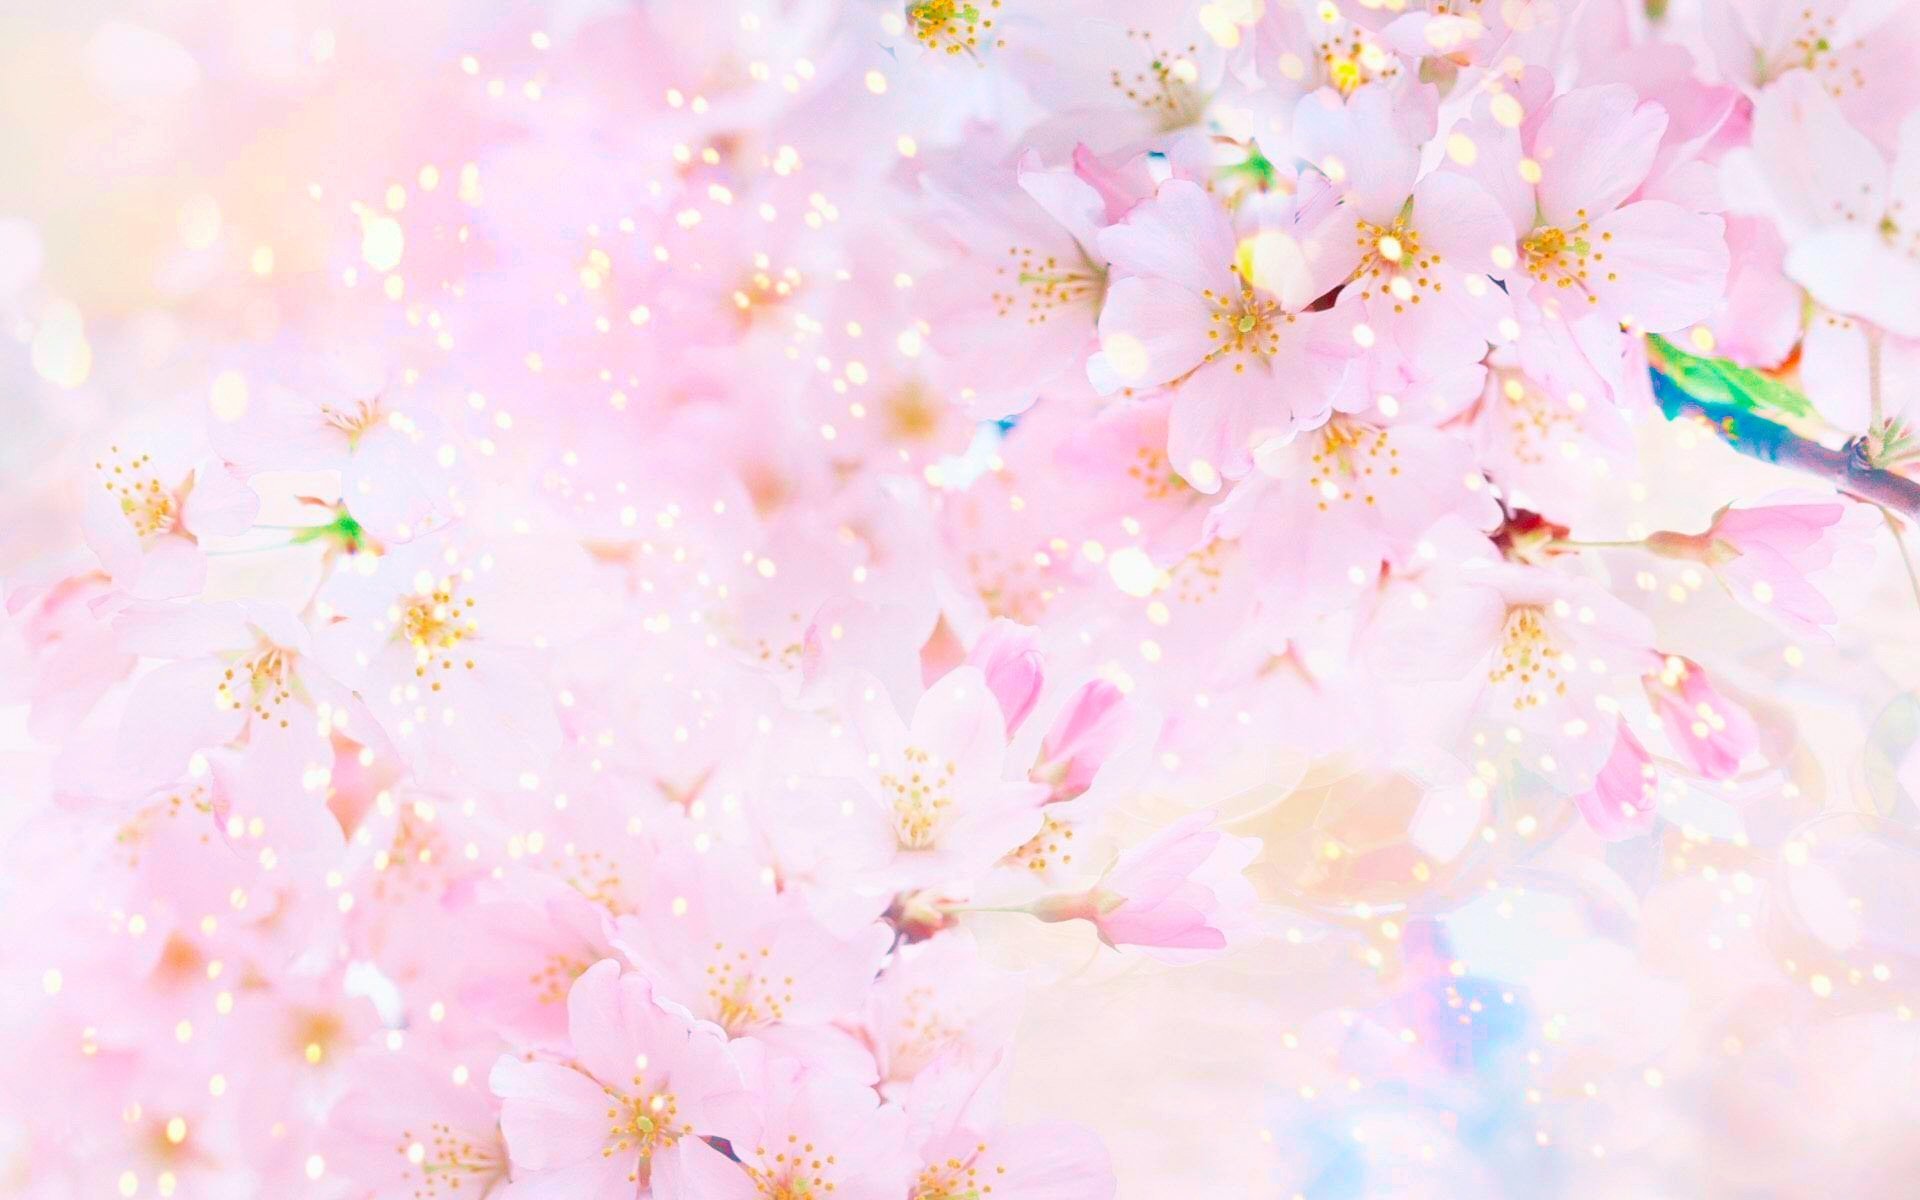 Blossom Colors Of Spring 22april2015wednesday